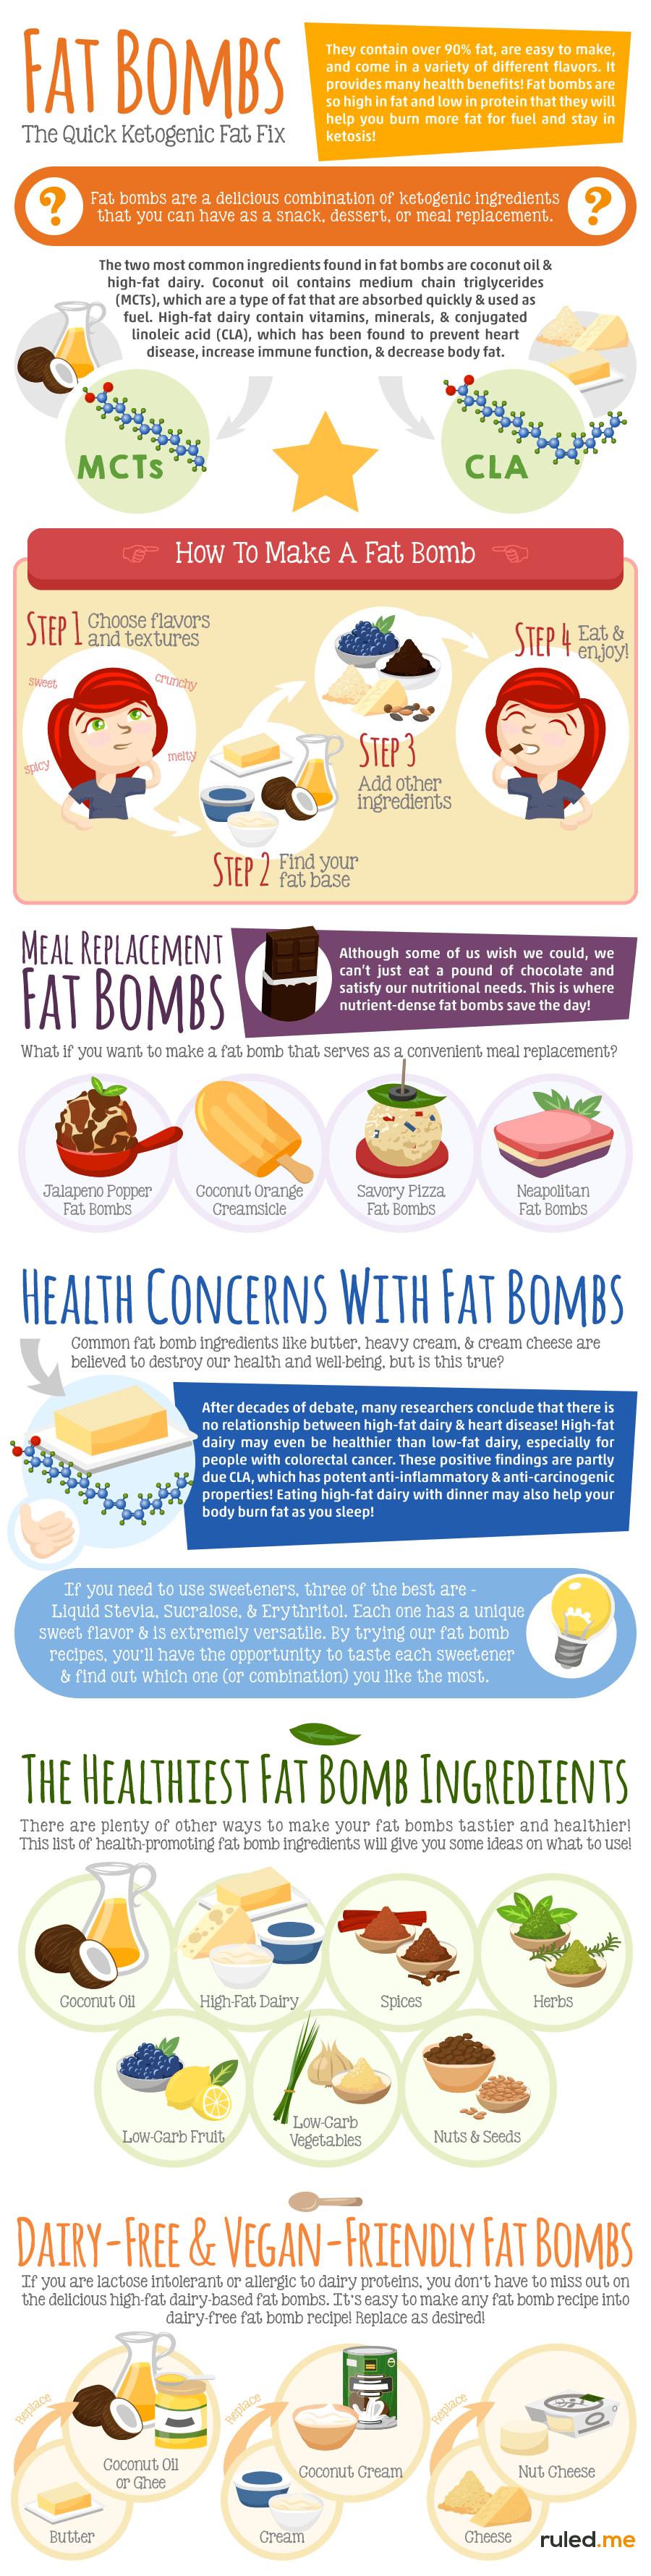 keto diet fat bombs healthy?